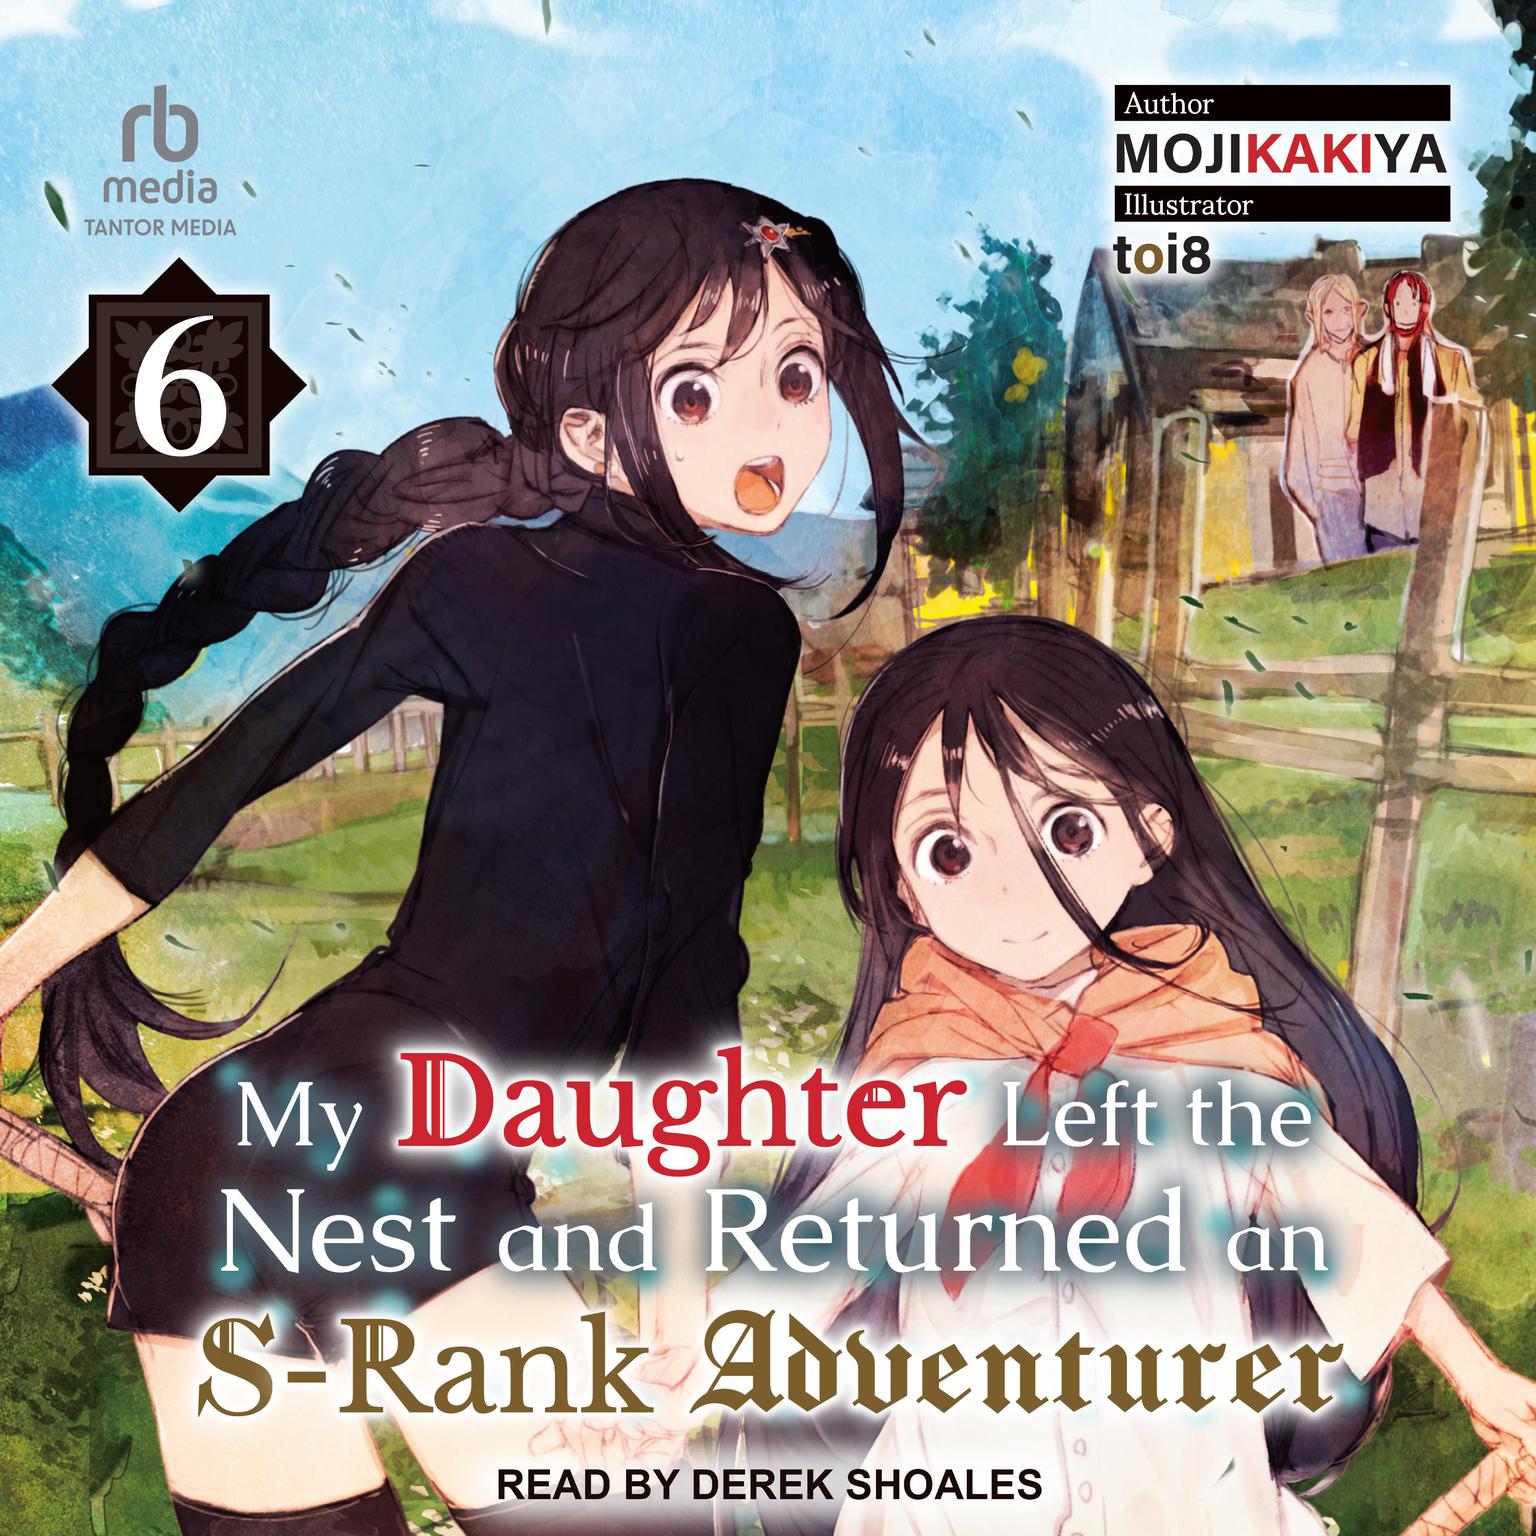 My Daughter Left the Nest and Returned an S-Rank Adventurer: Volume 6 Audiobook, by MOJIKAKIYA 